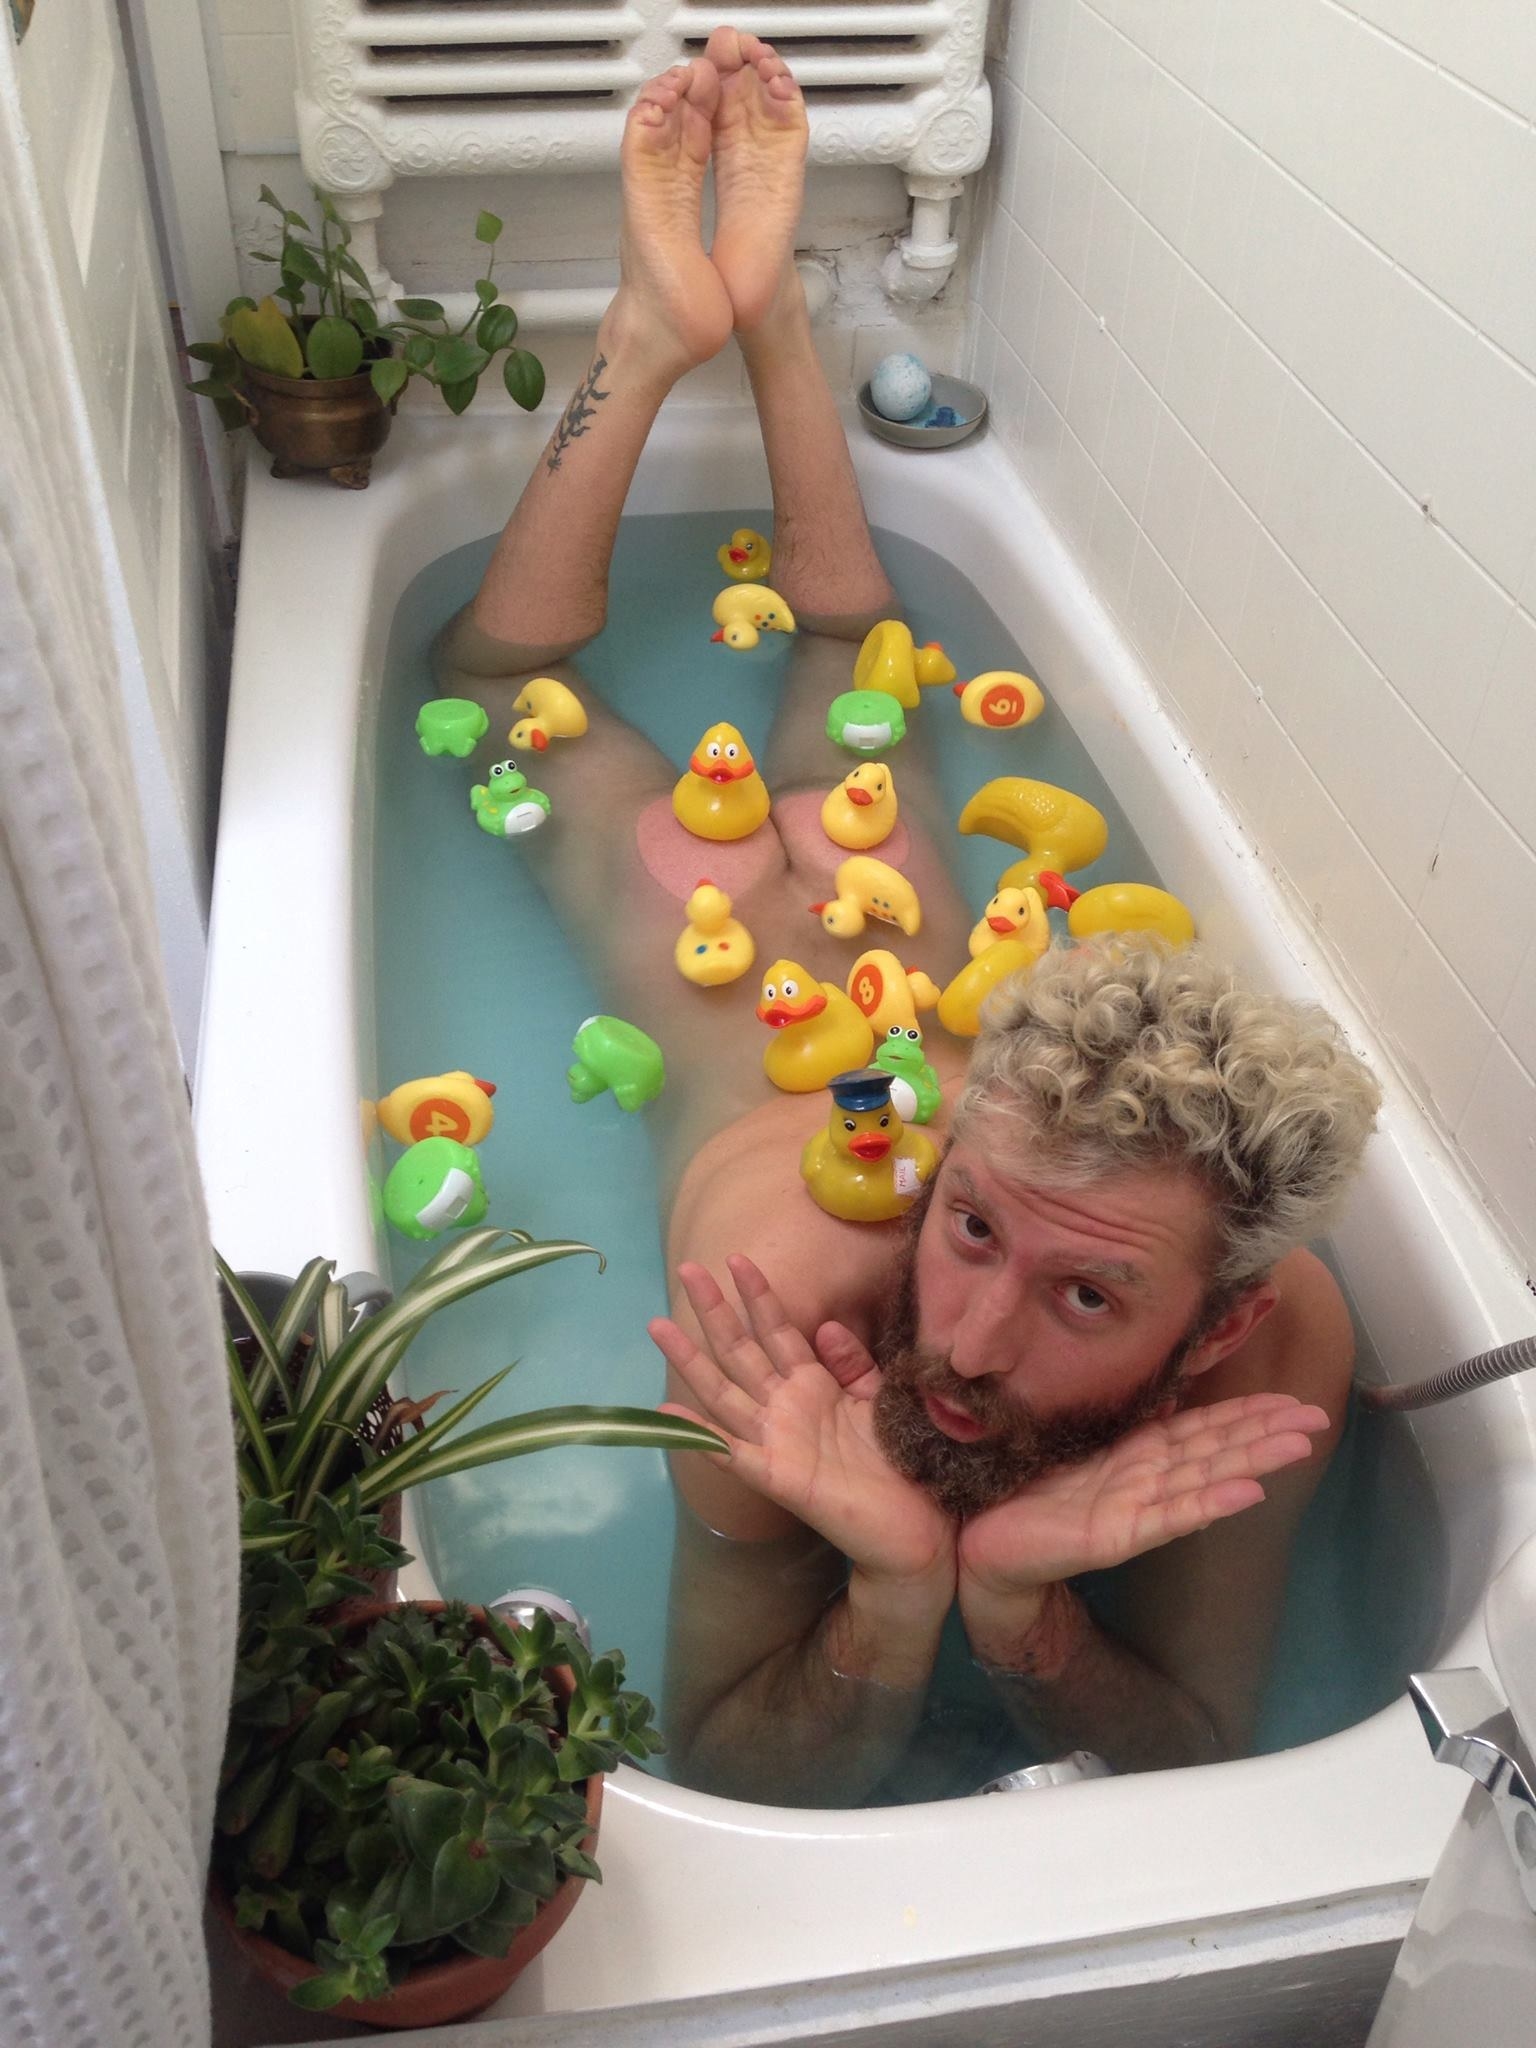 Bathing At Strangers Houses, Seattle Bathtub Guy